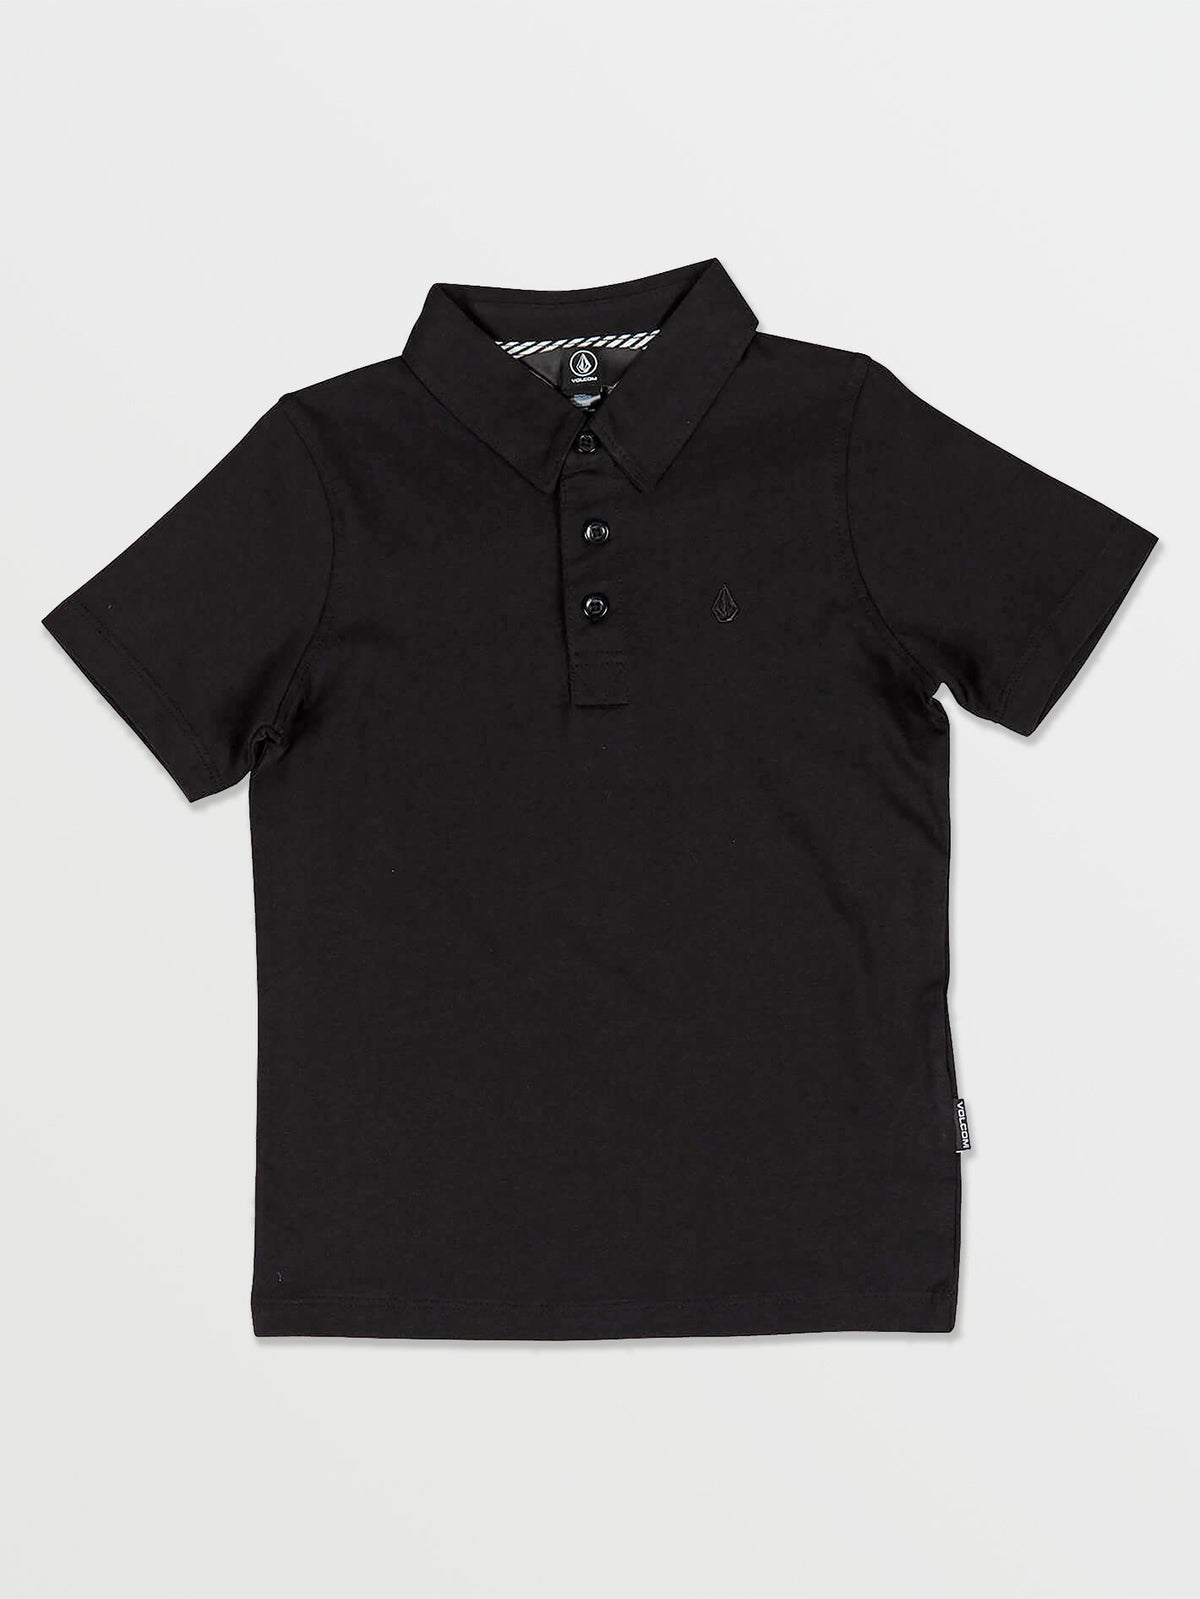 Volcom Wowzer Polo Boys Short Sleeve Shirt (Age 2-7) Black